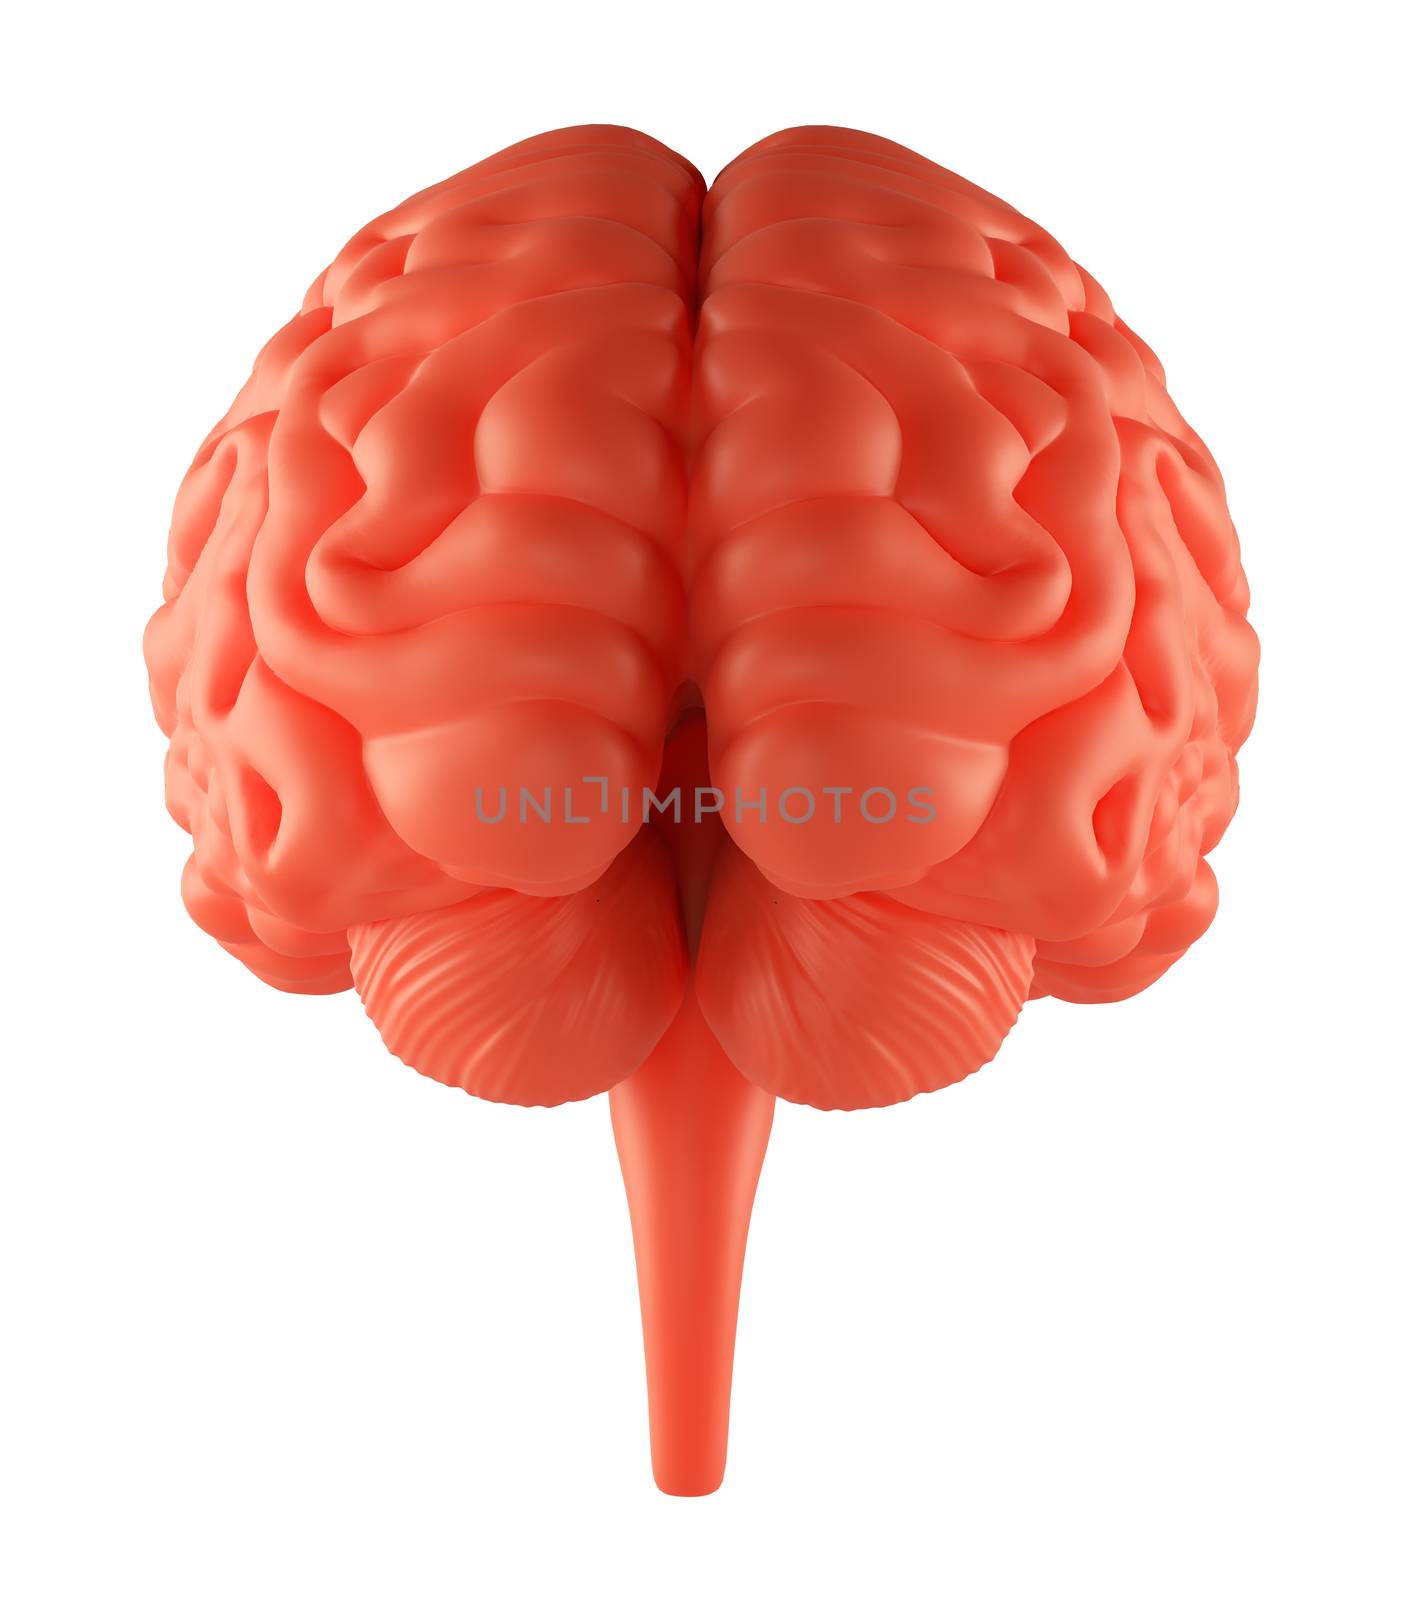 Anger Red Brain. Isolated on white. 3D Illustration